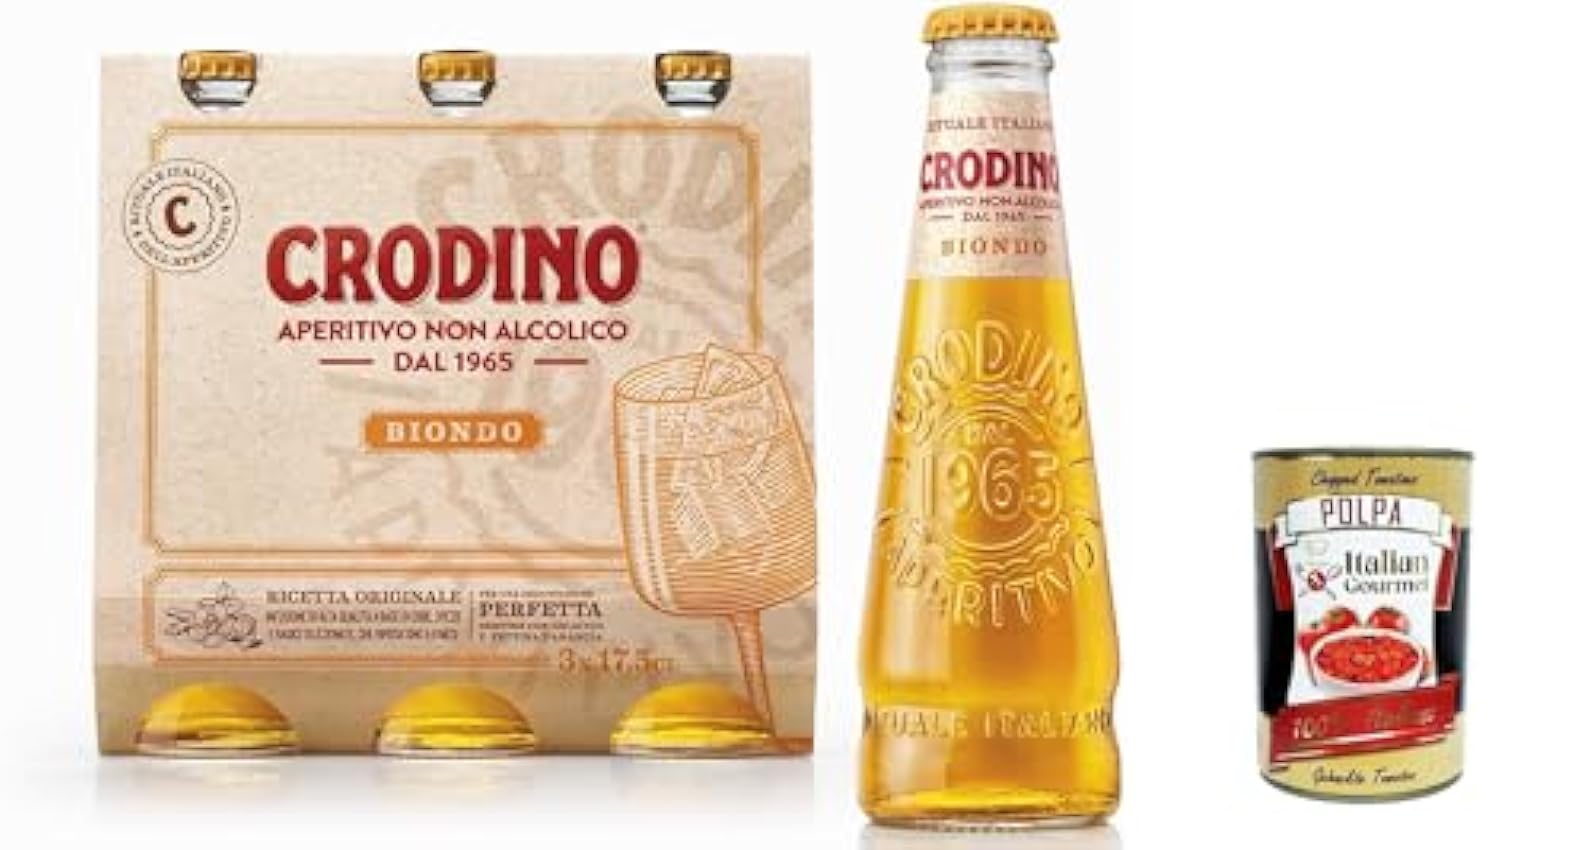 San pellegrino Crodino 3 x 175 ml apéritif sans alcool amer d´Italie + polpa gourmet italien 400 g mnhm38Mv